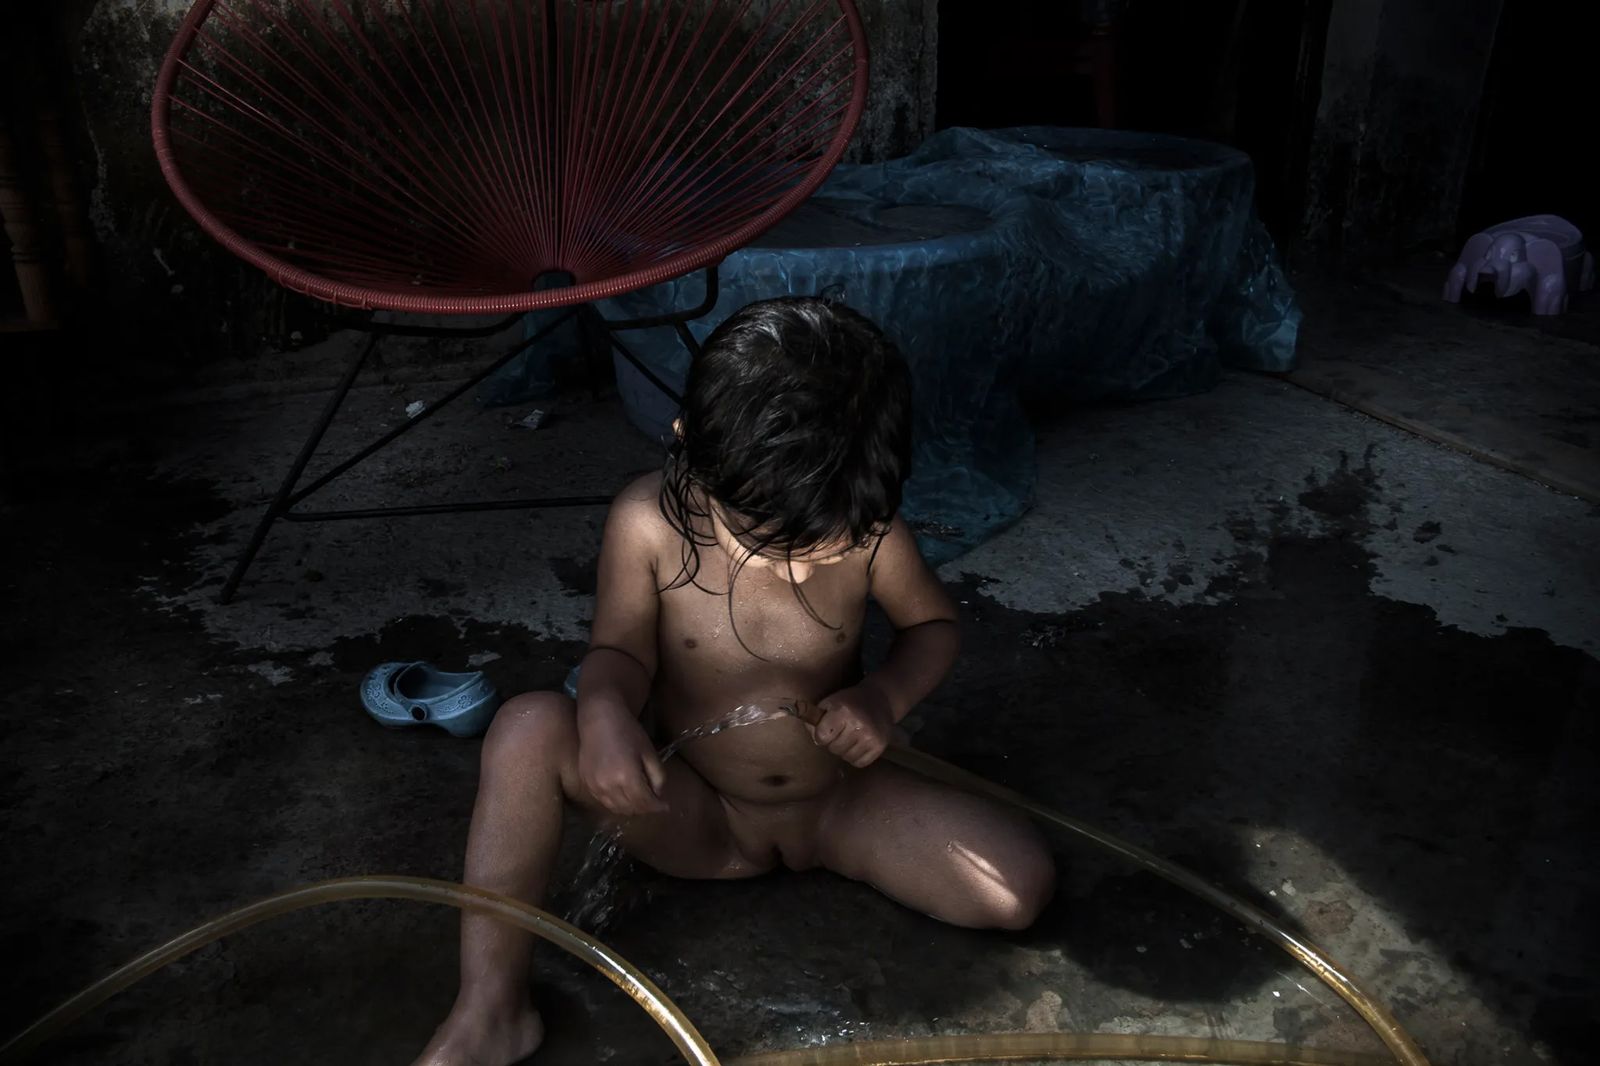 © Yael Martínez - The bather. Itzel Martinez (my daughter) taking a bath at home. Guerrero Mexico